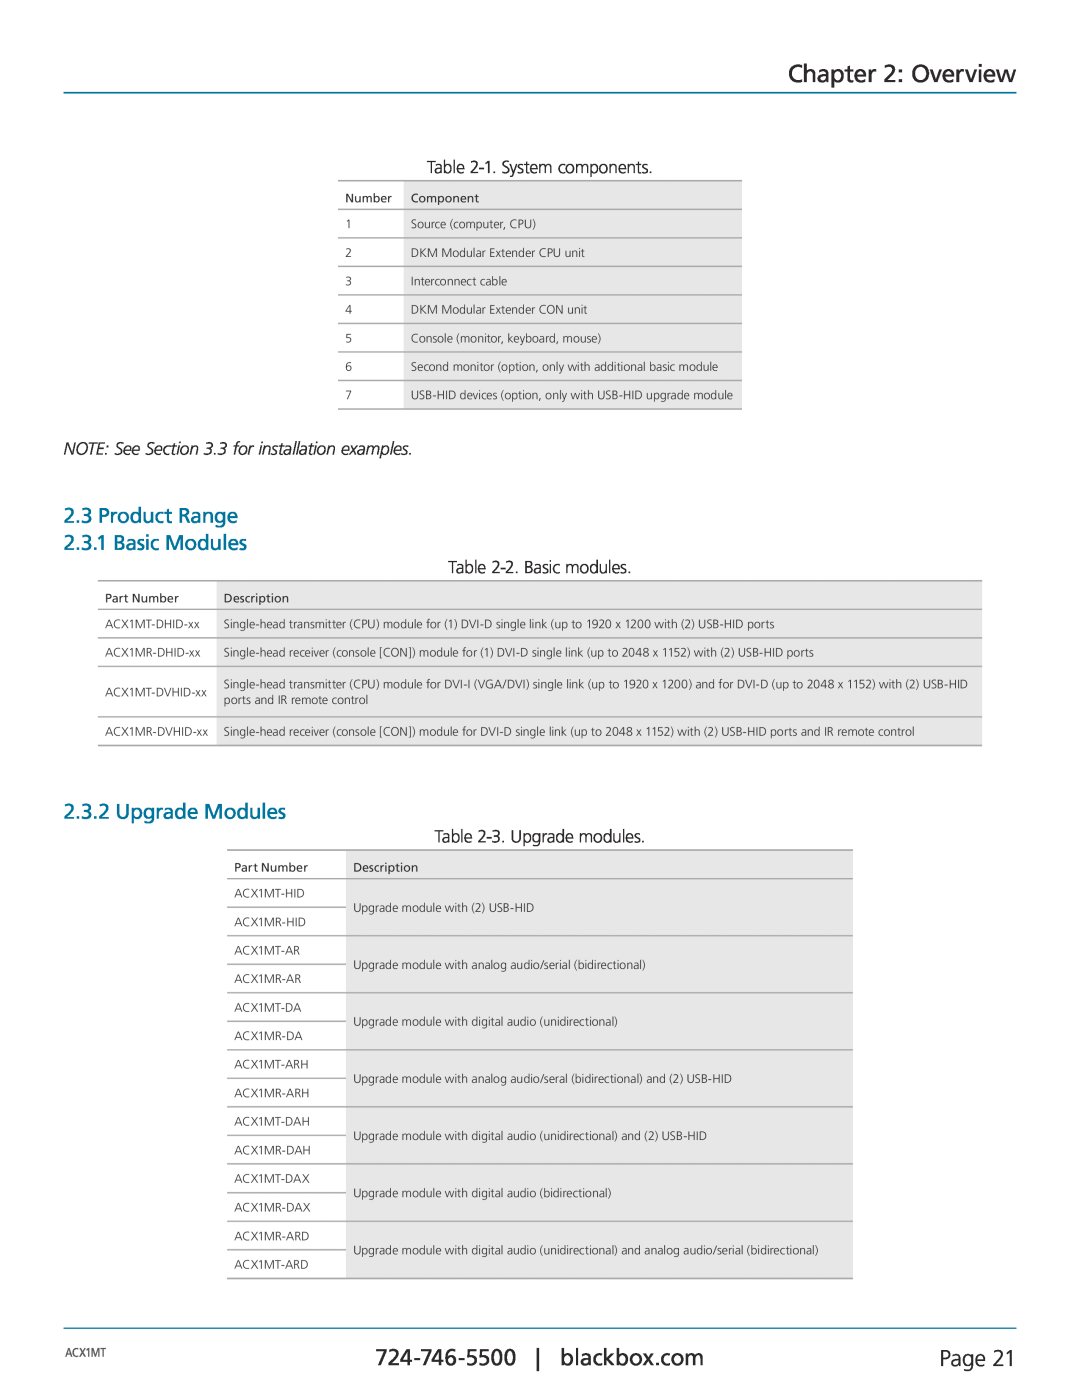 Black Box ACXMODH2, ACXMODH4, ACXMODH-RMK, ACX1MR Overview, Product Range 2.3.1 Basic Modules, Upgrade Modules, Page, ACX1MT 